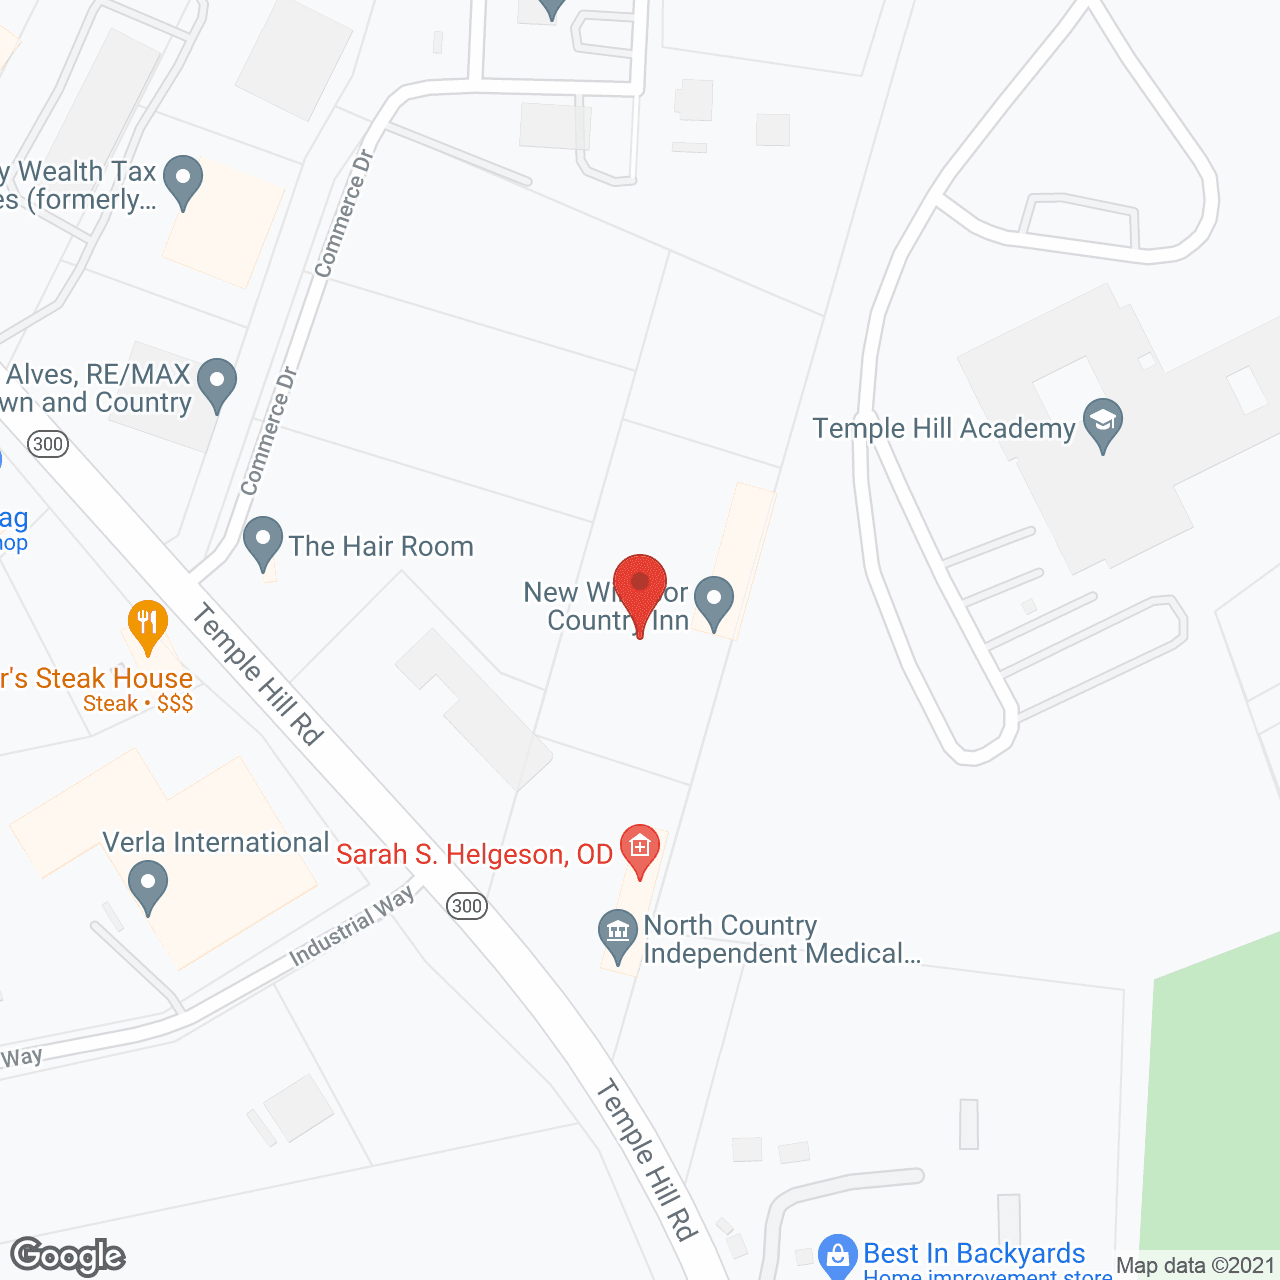 New Windsor Country Inn in google map